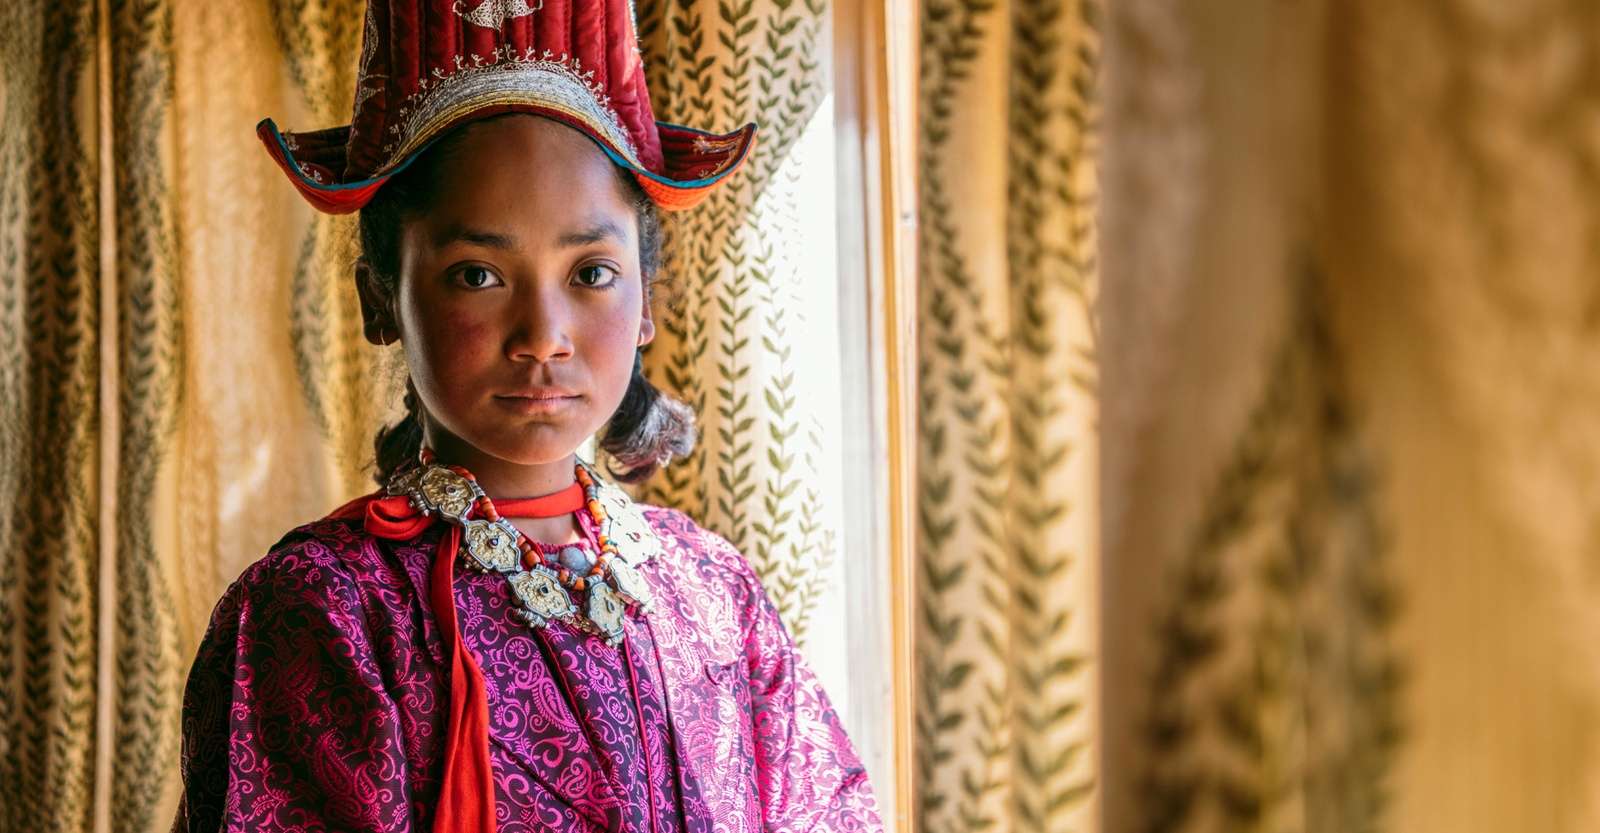 Tibetan girl, Ladakh, India.